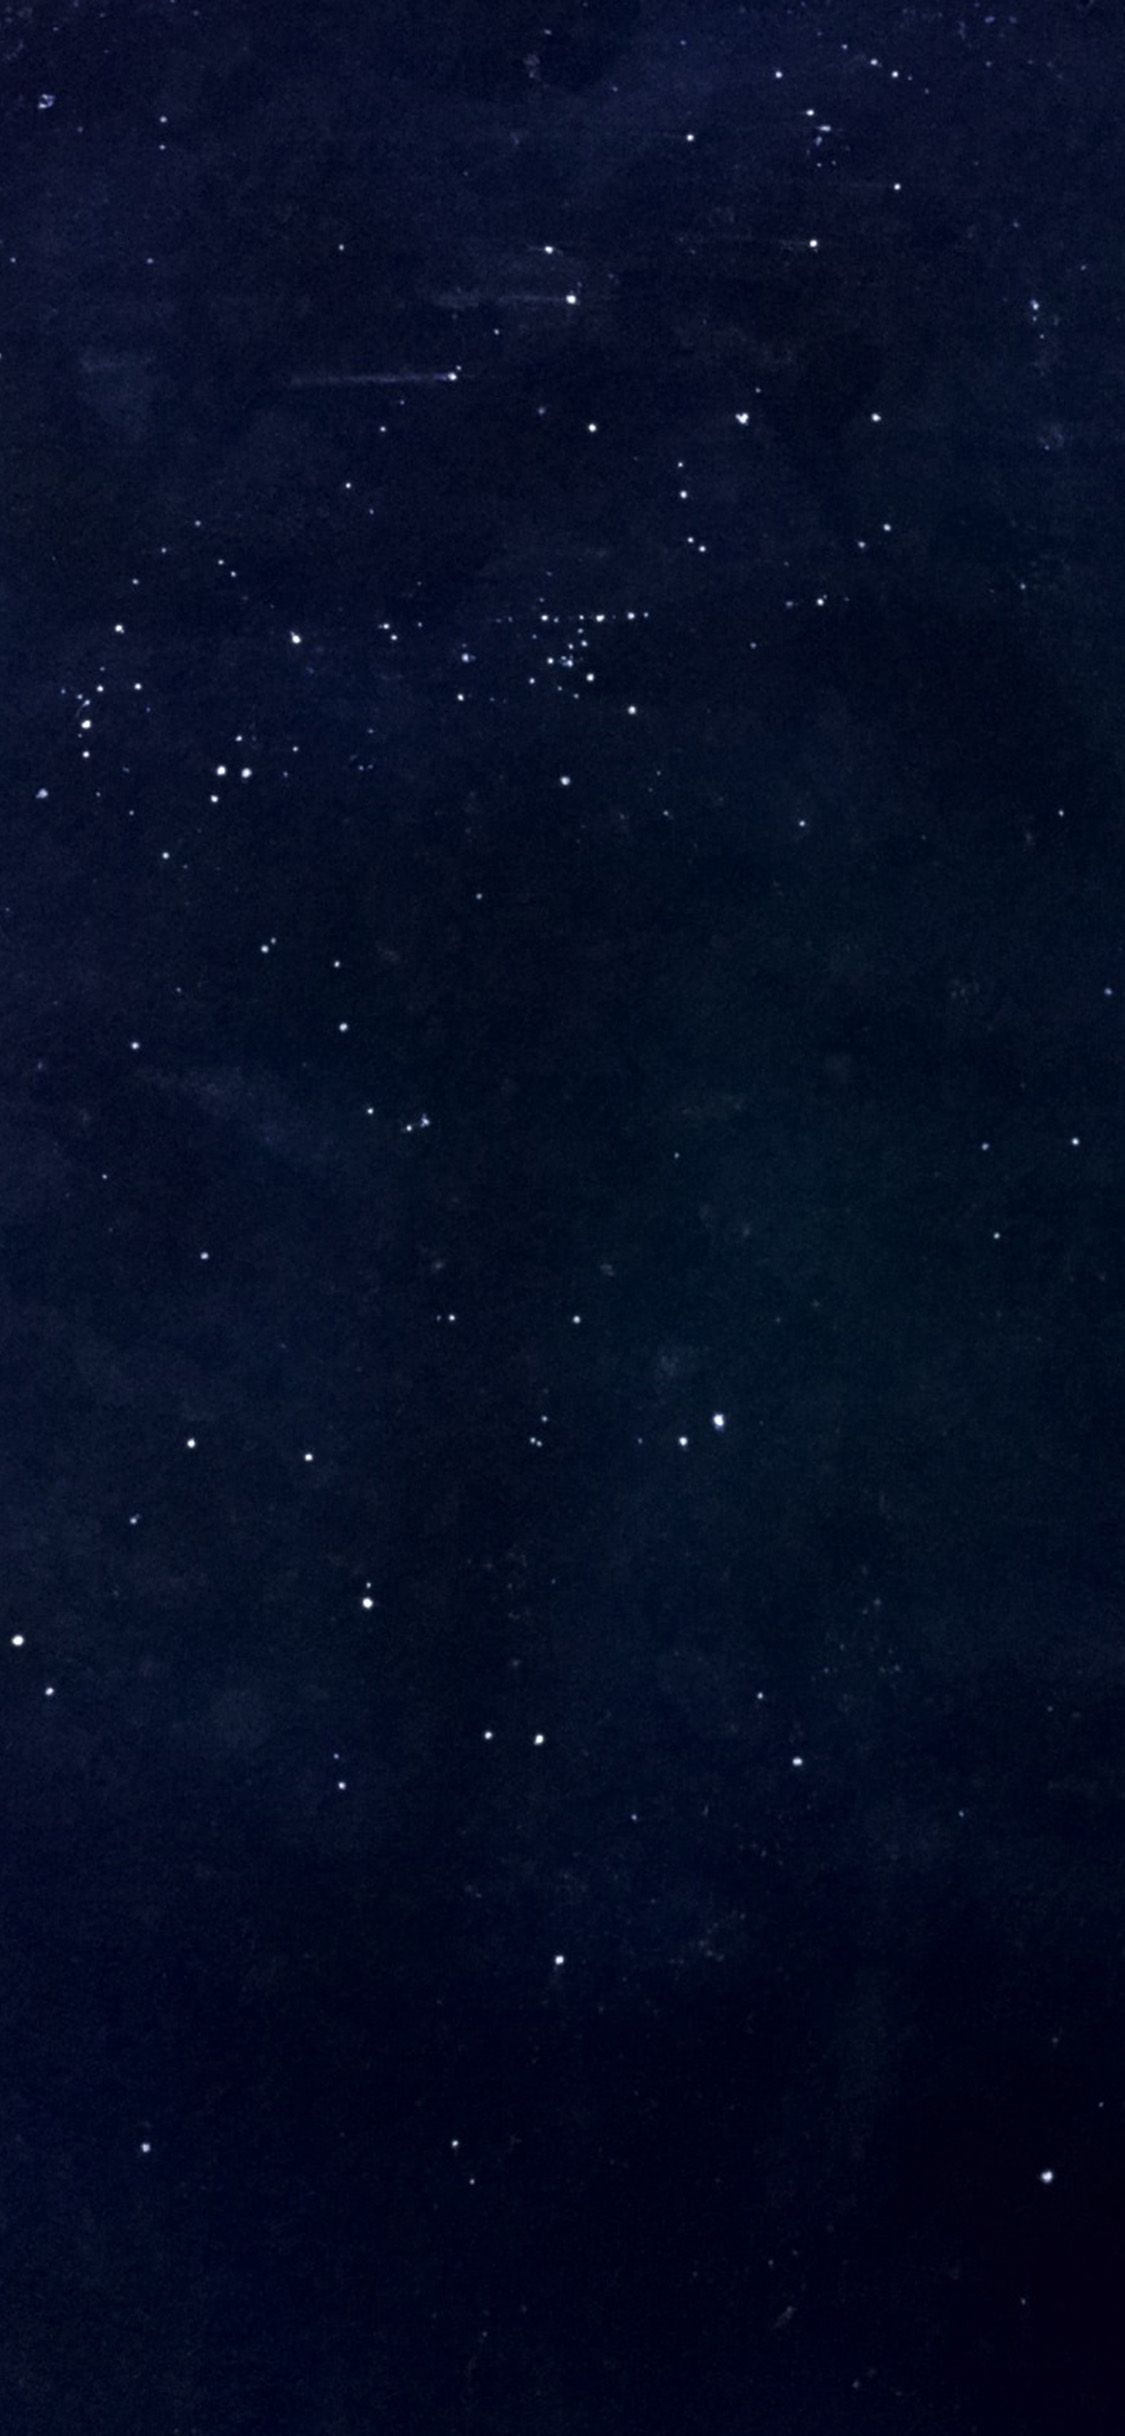 iPhone X wallpaper. art night sky dark blue